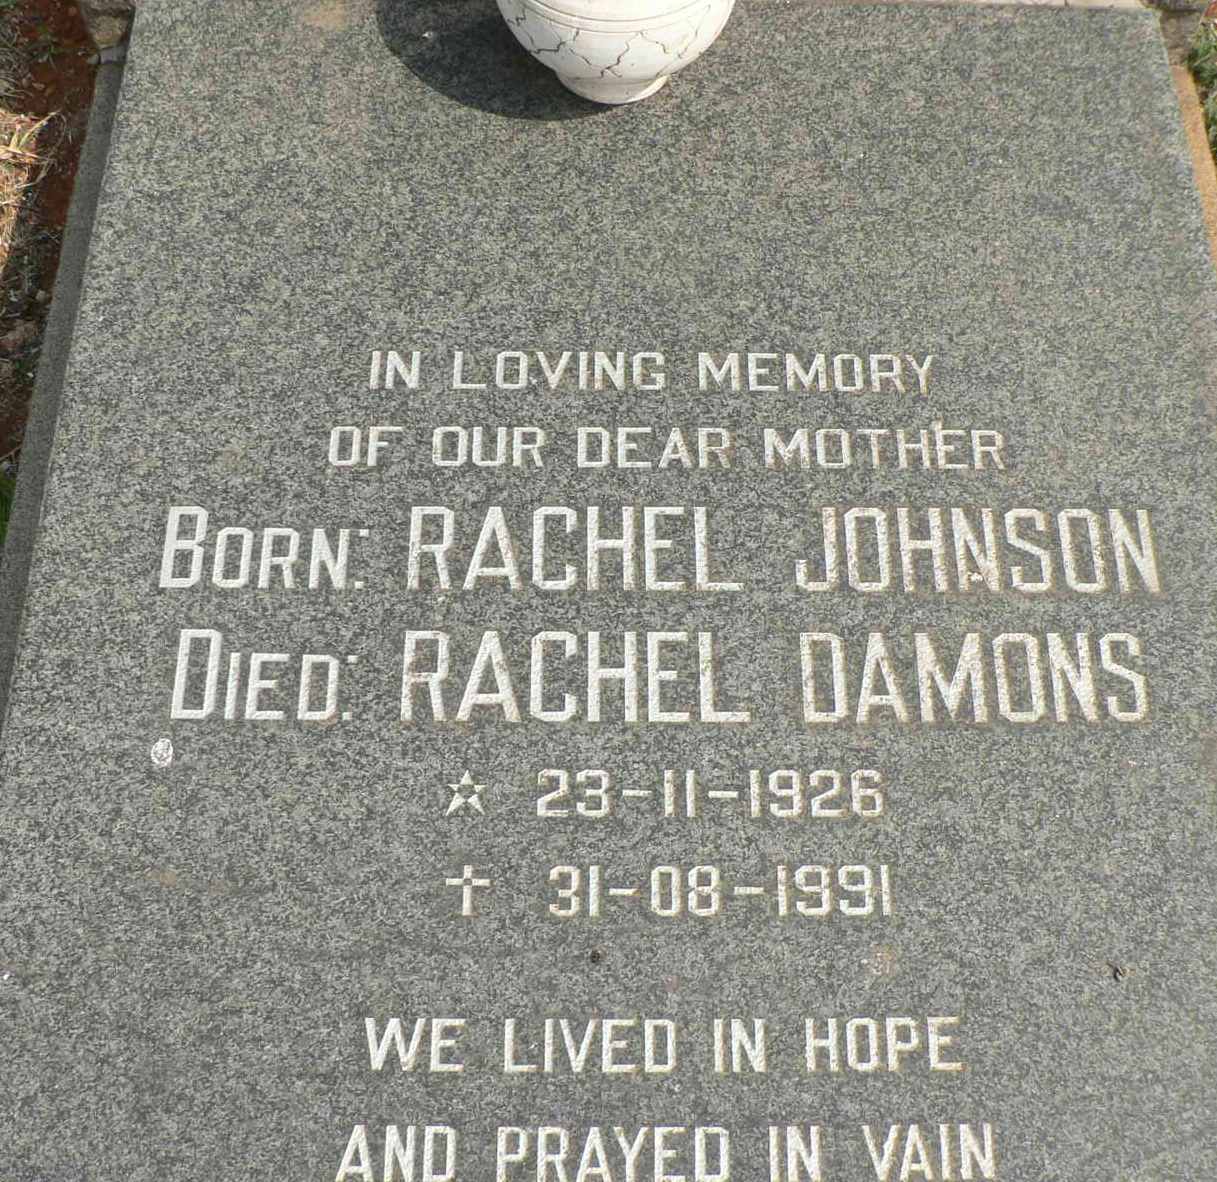 DAMONS Rachel nee JOHNSON 1926-1991